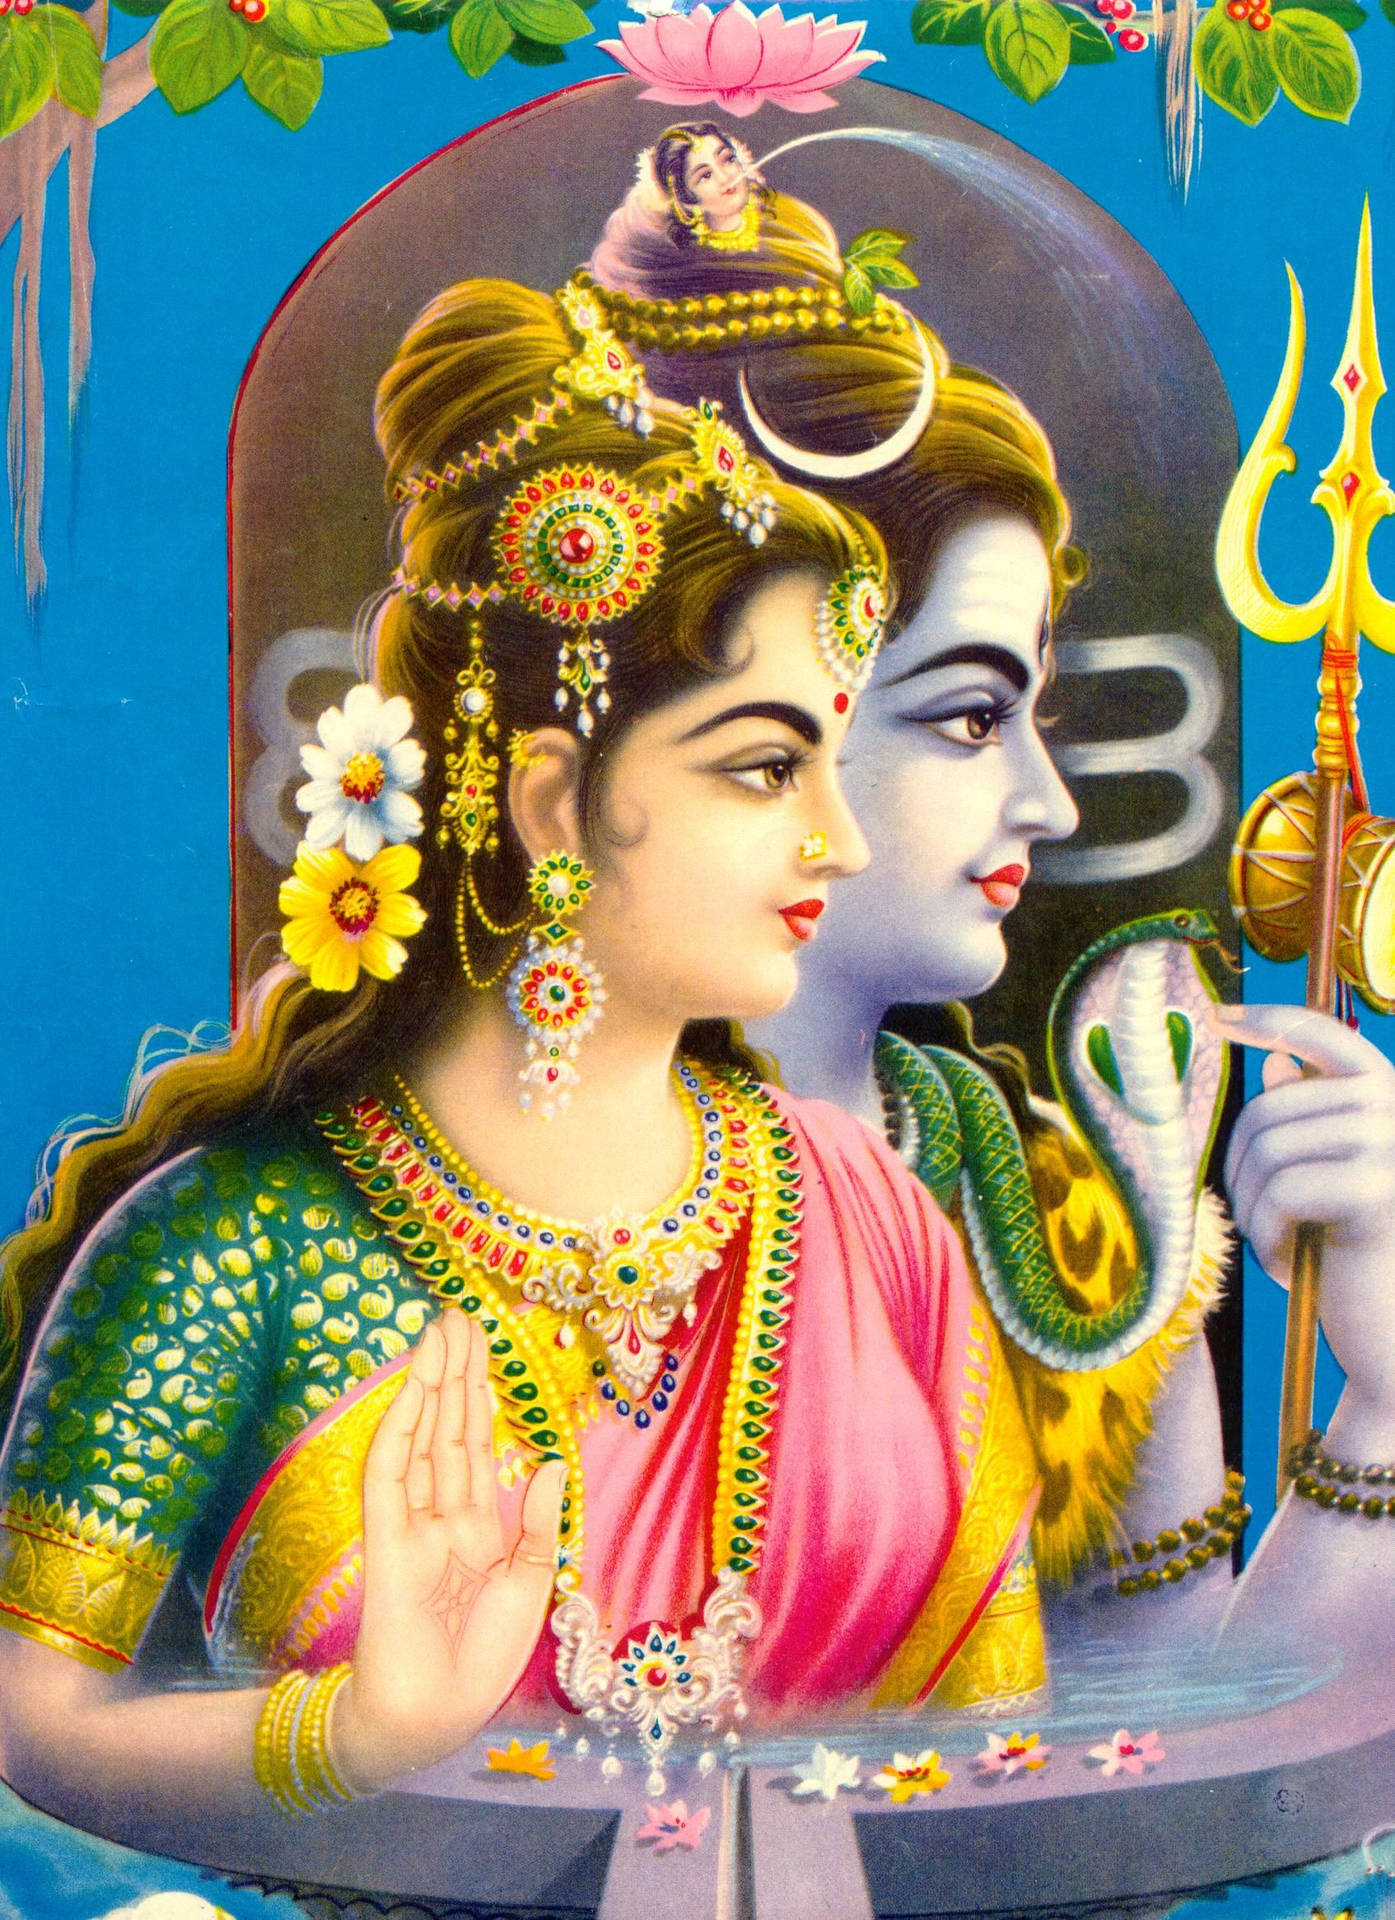 Free Shiva Parvati Wallpaper Downloads, [100+] Shiva Parvati Wallpapers for  FREE 